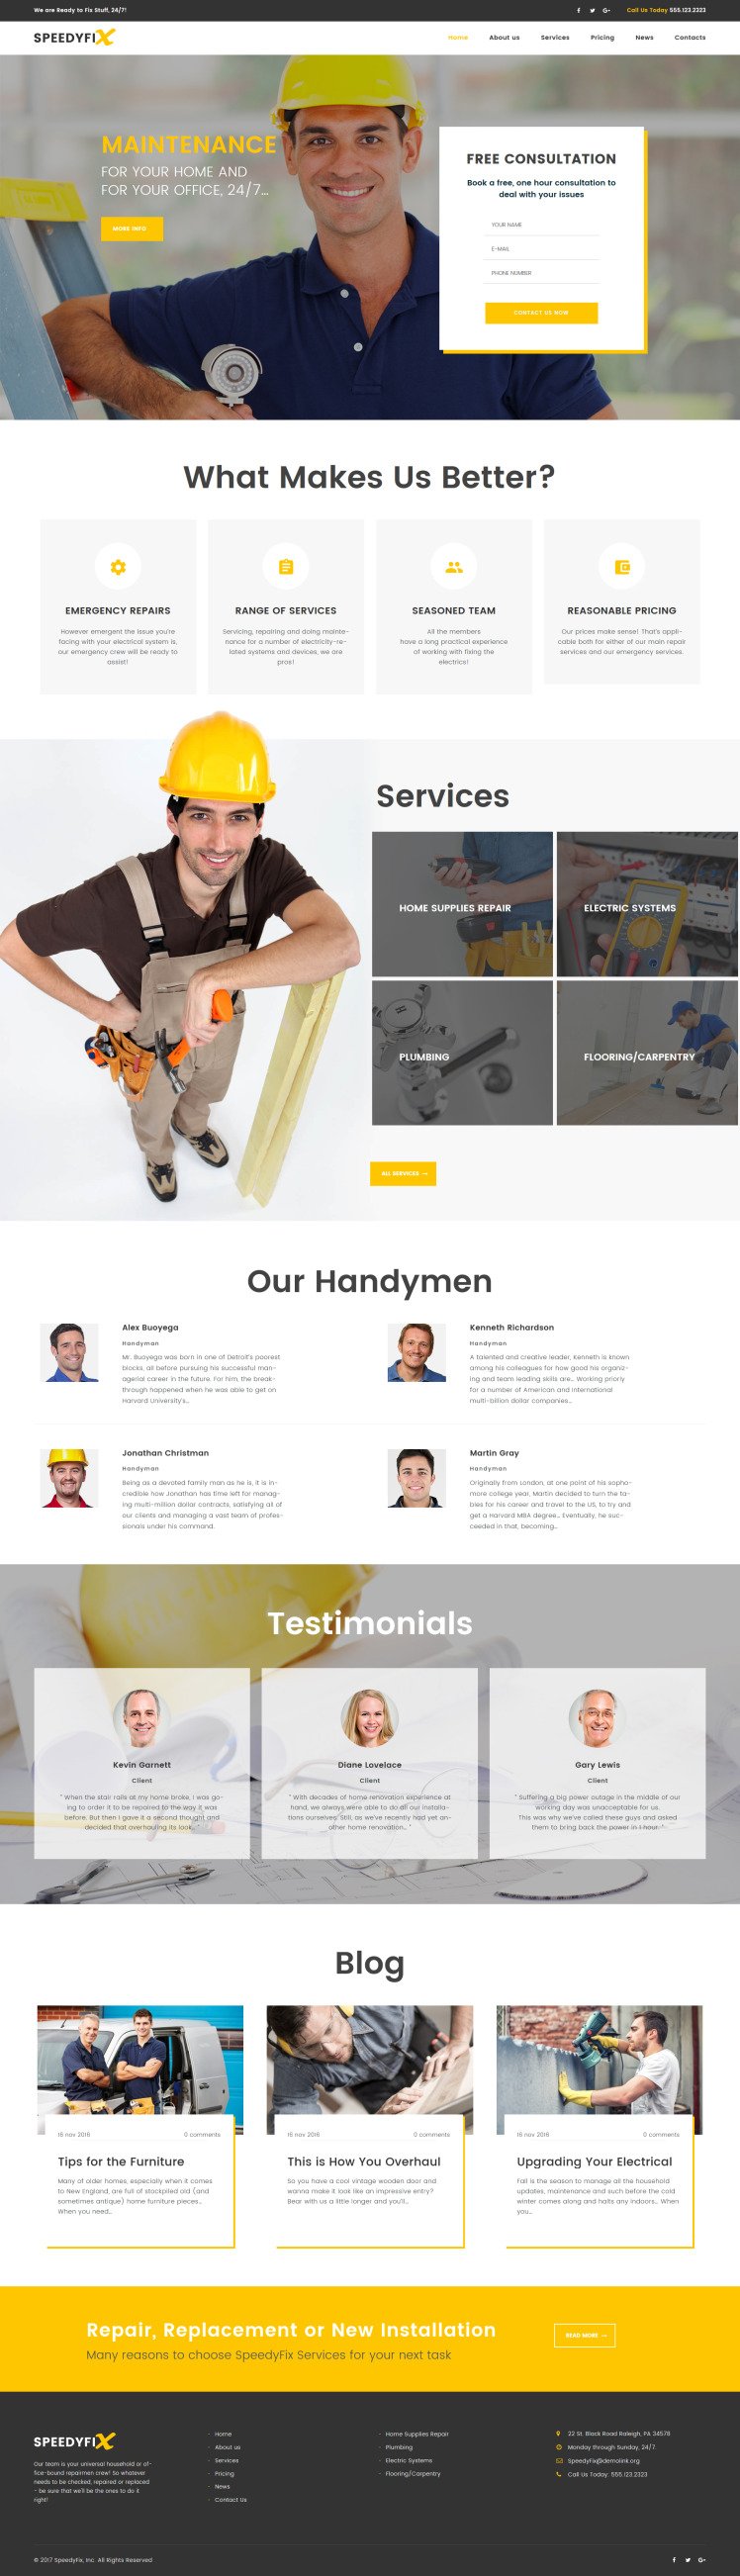 SpeedyFix Handyman Services WordPress Theme